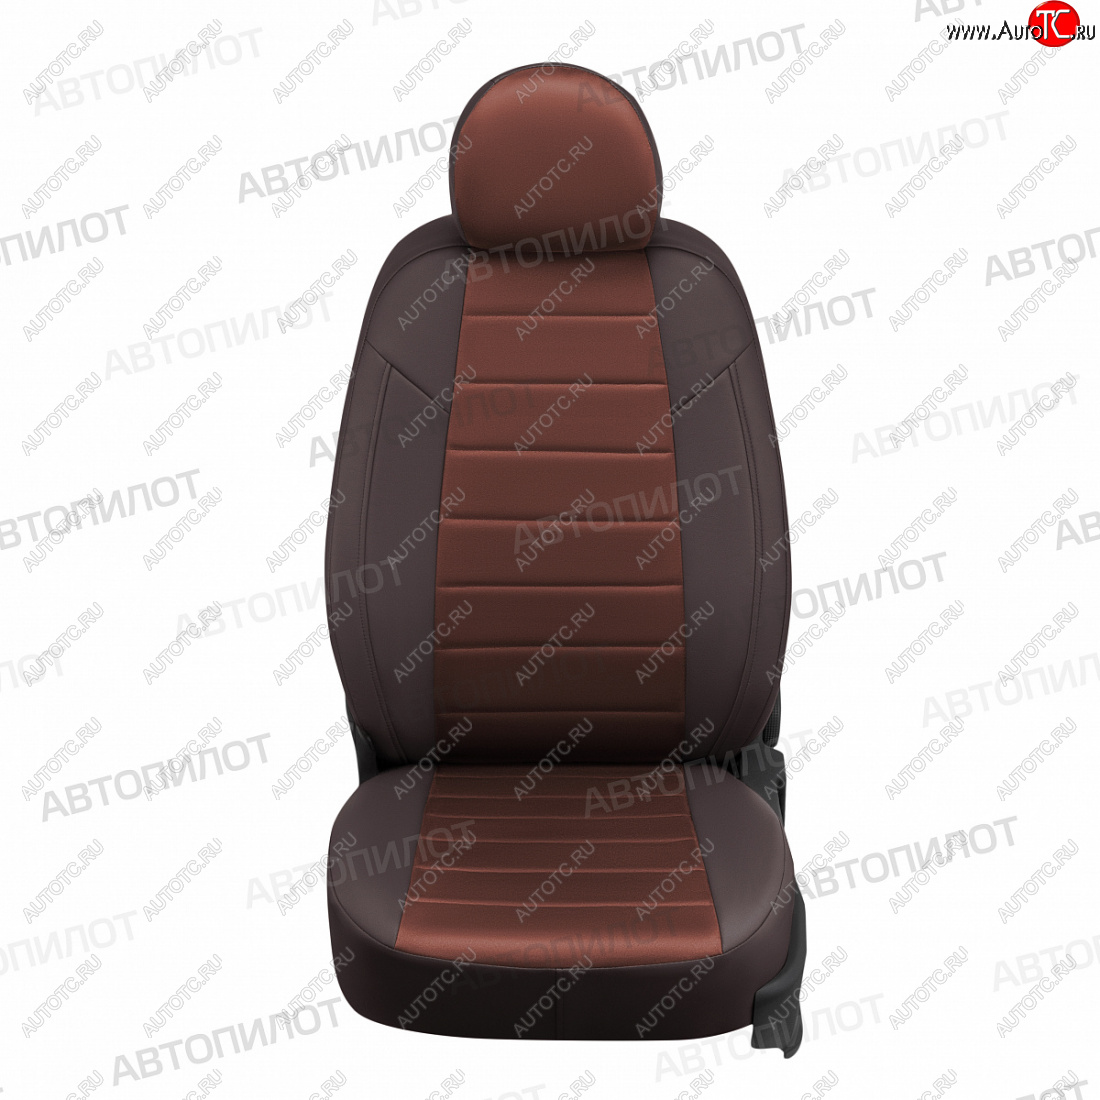 13 449 р. Чехлы сидений (экокожа/алькантара) Автопилот  Hyundai Sonata  NF (2004-2010) (шоколад)